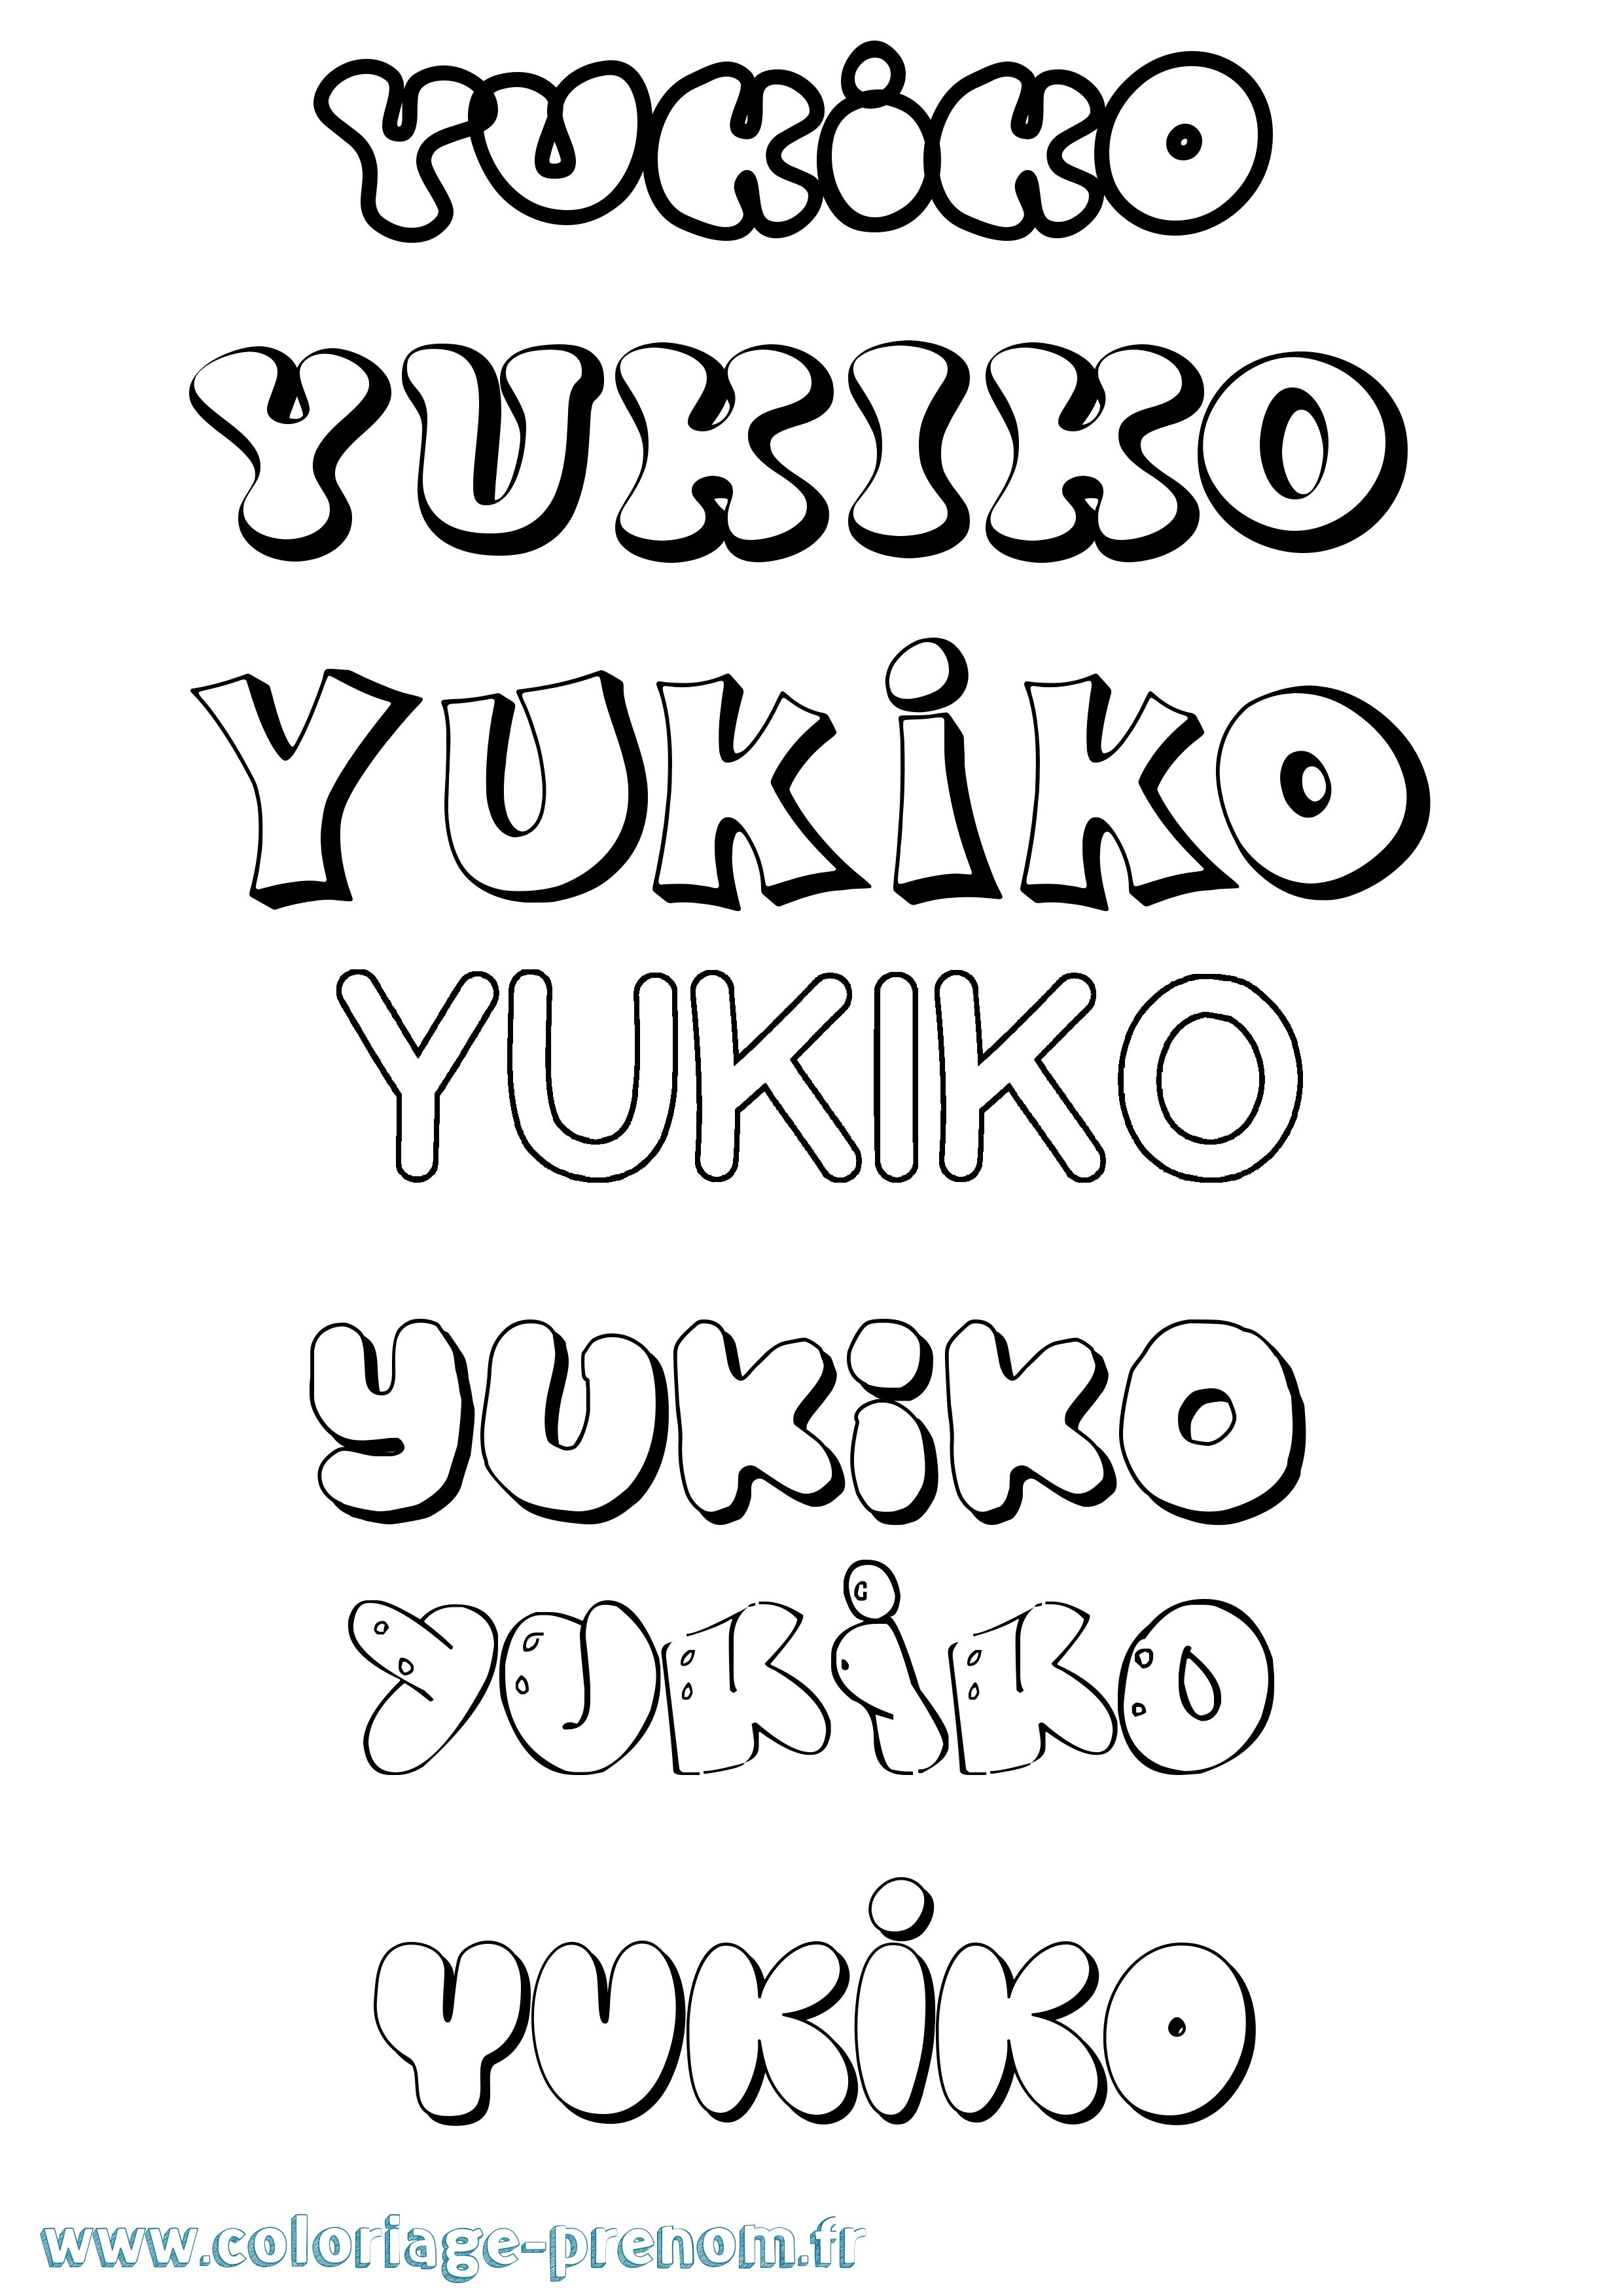 Coloriage prénom Yukiko Bubble